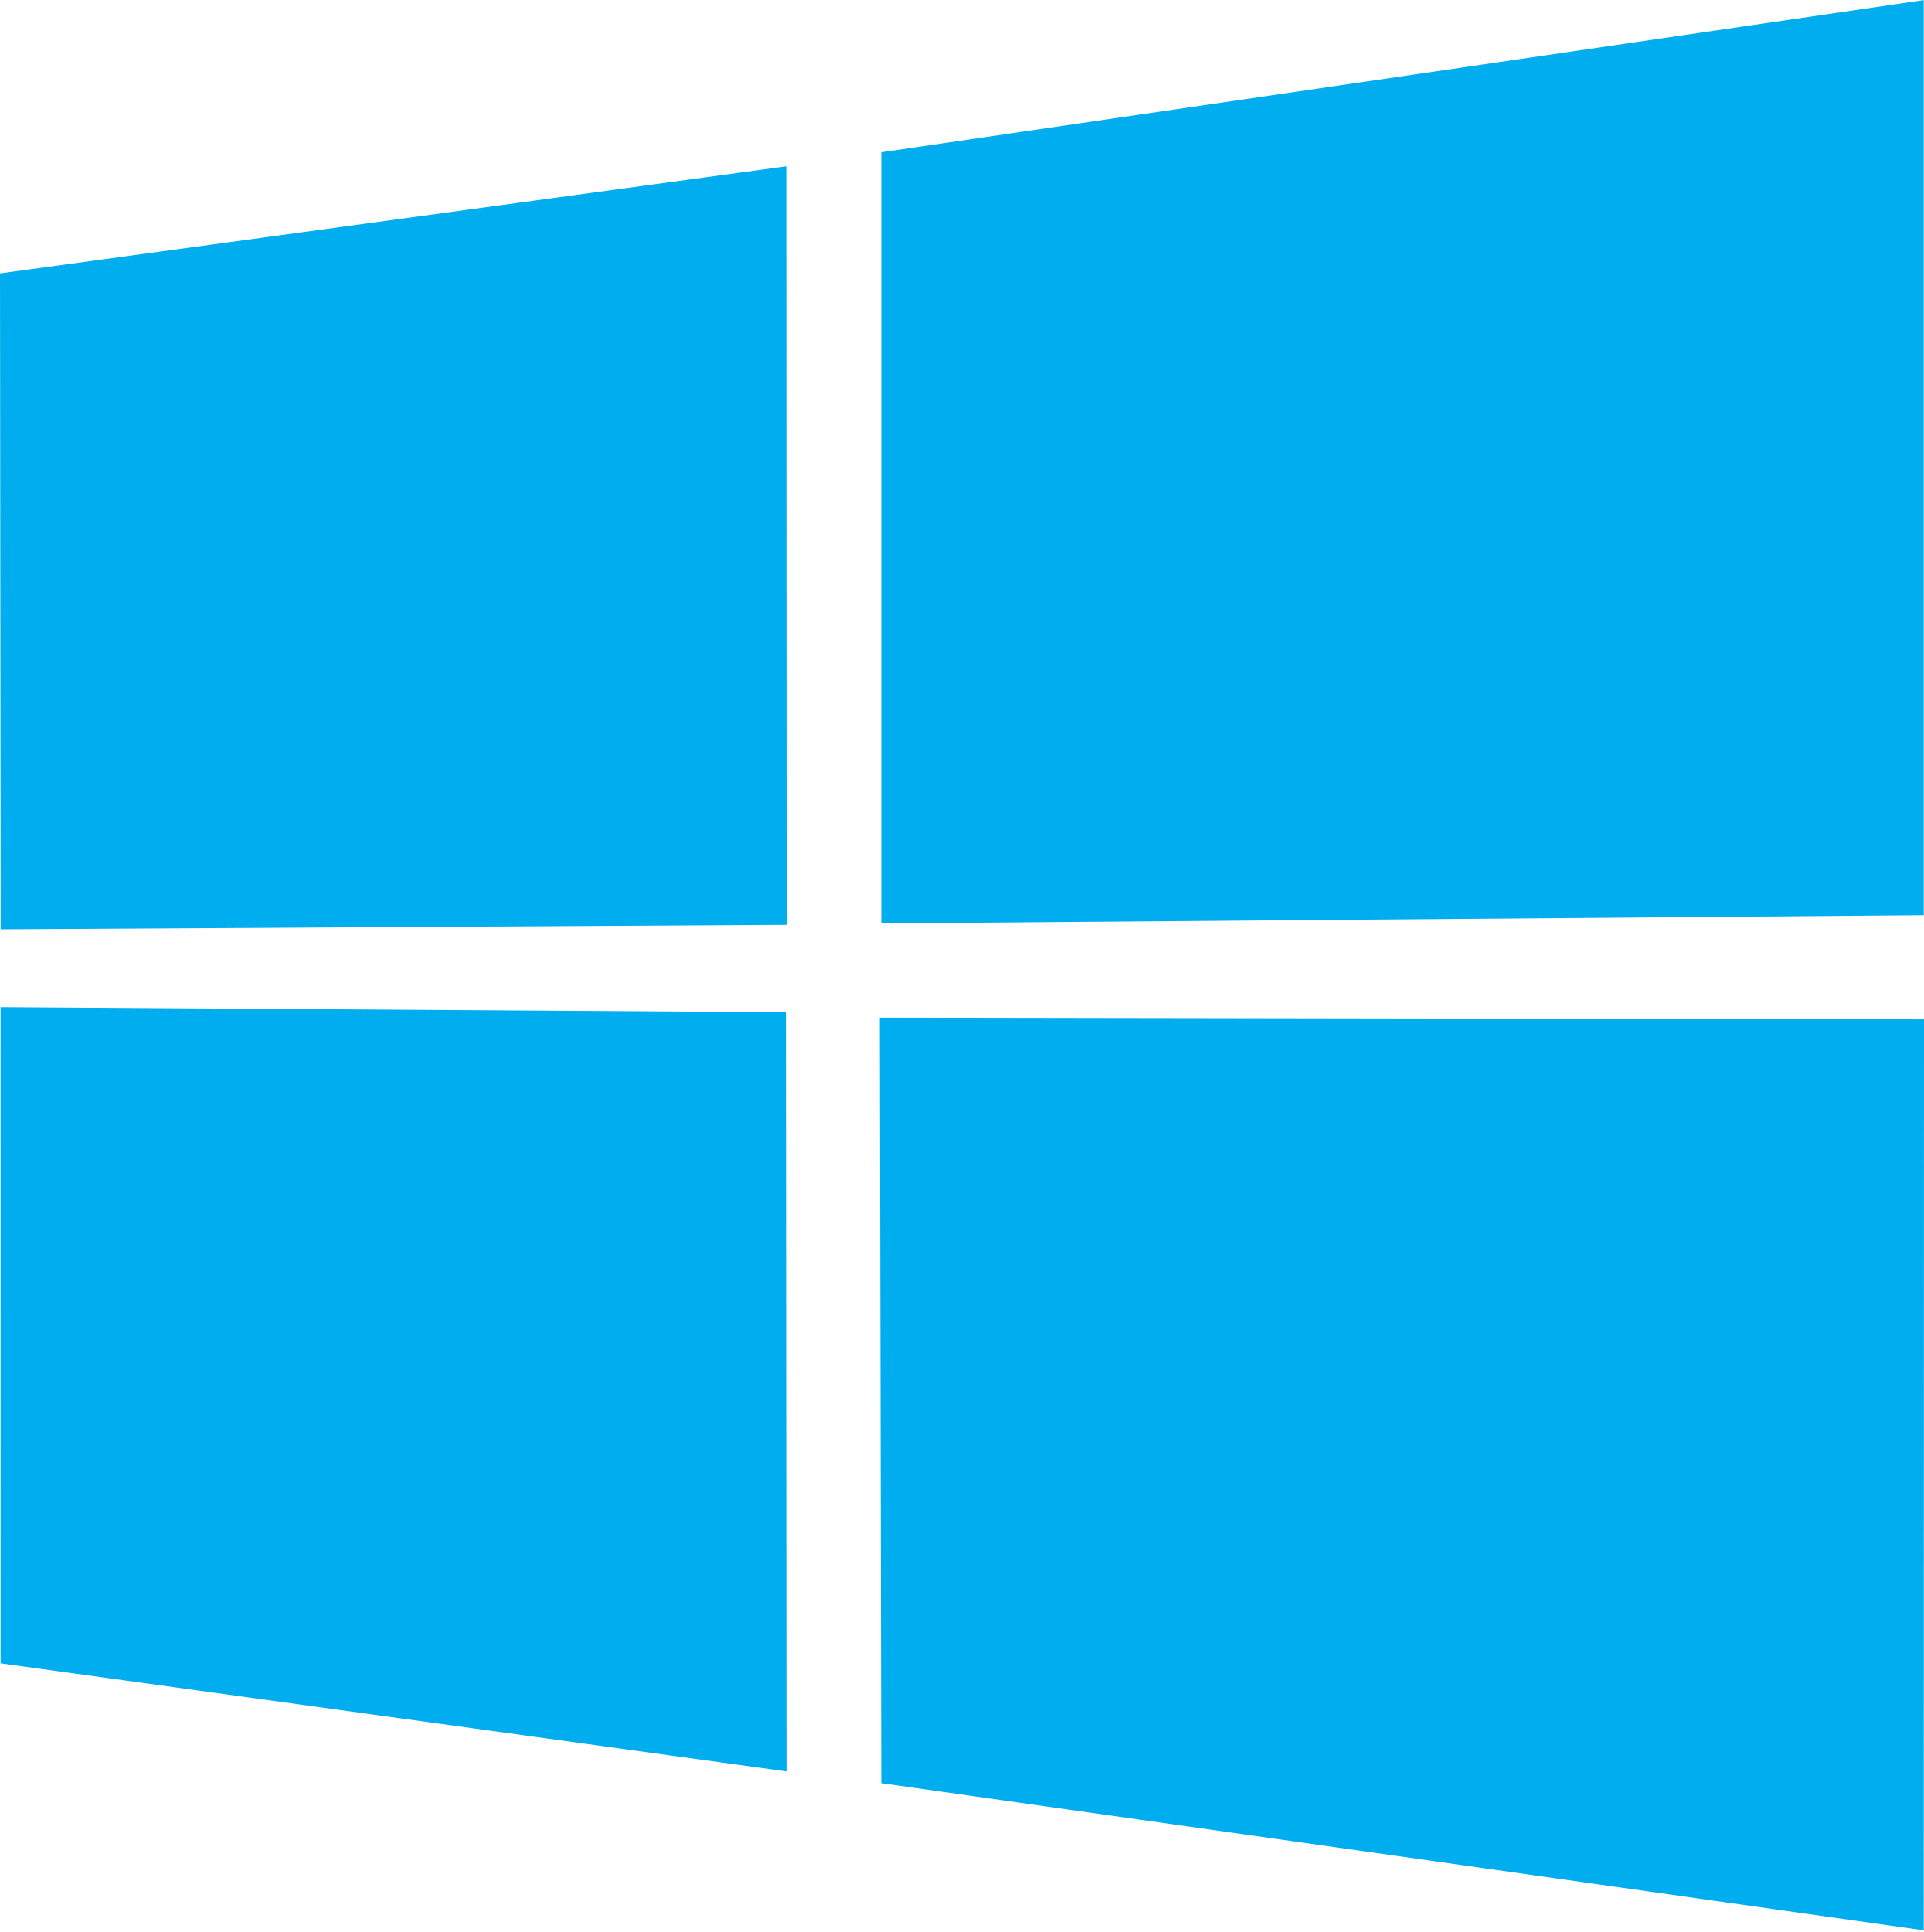 Windows digital signage